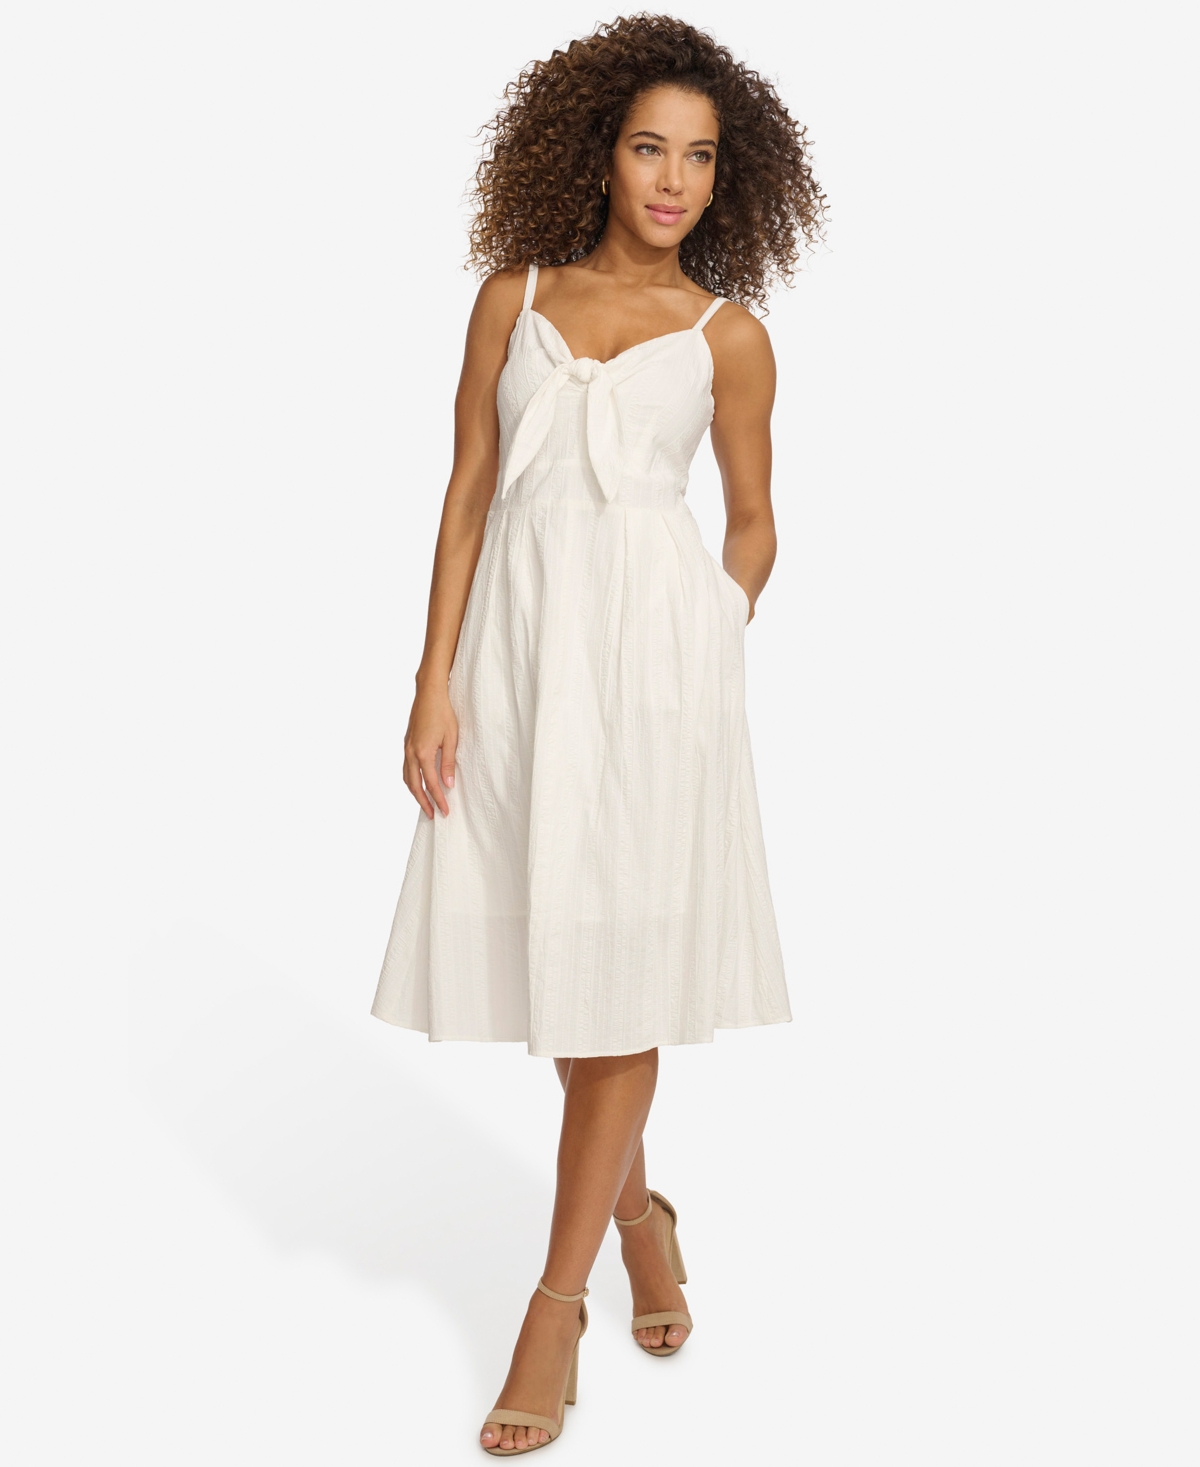 Women's Textured Cotton Knot-Front Sleeveless Dress - White